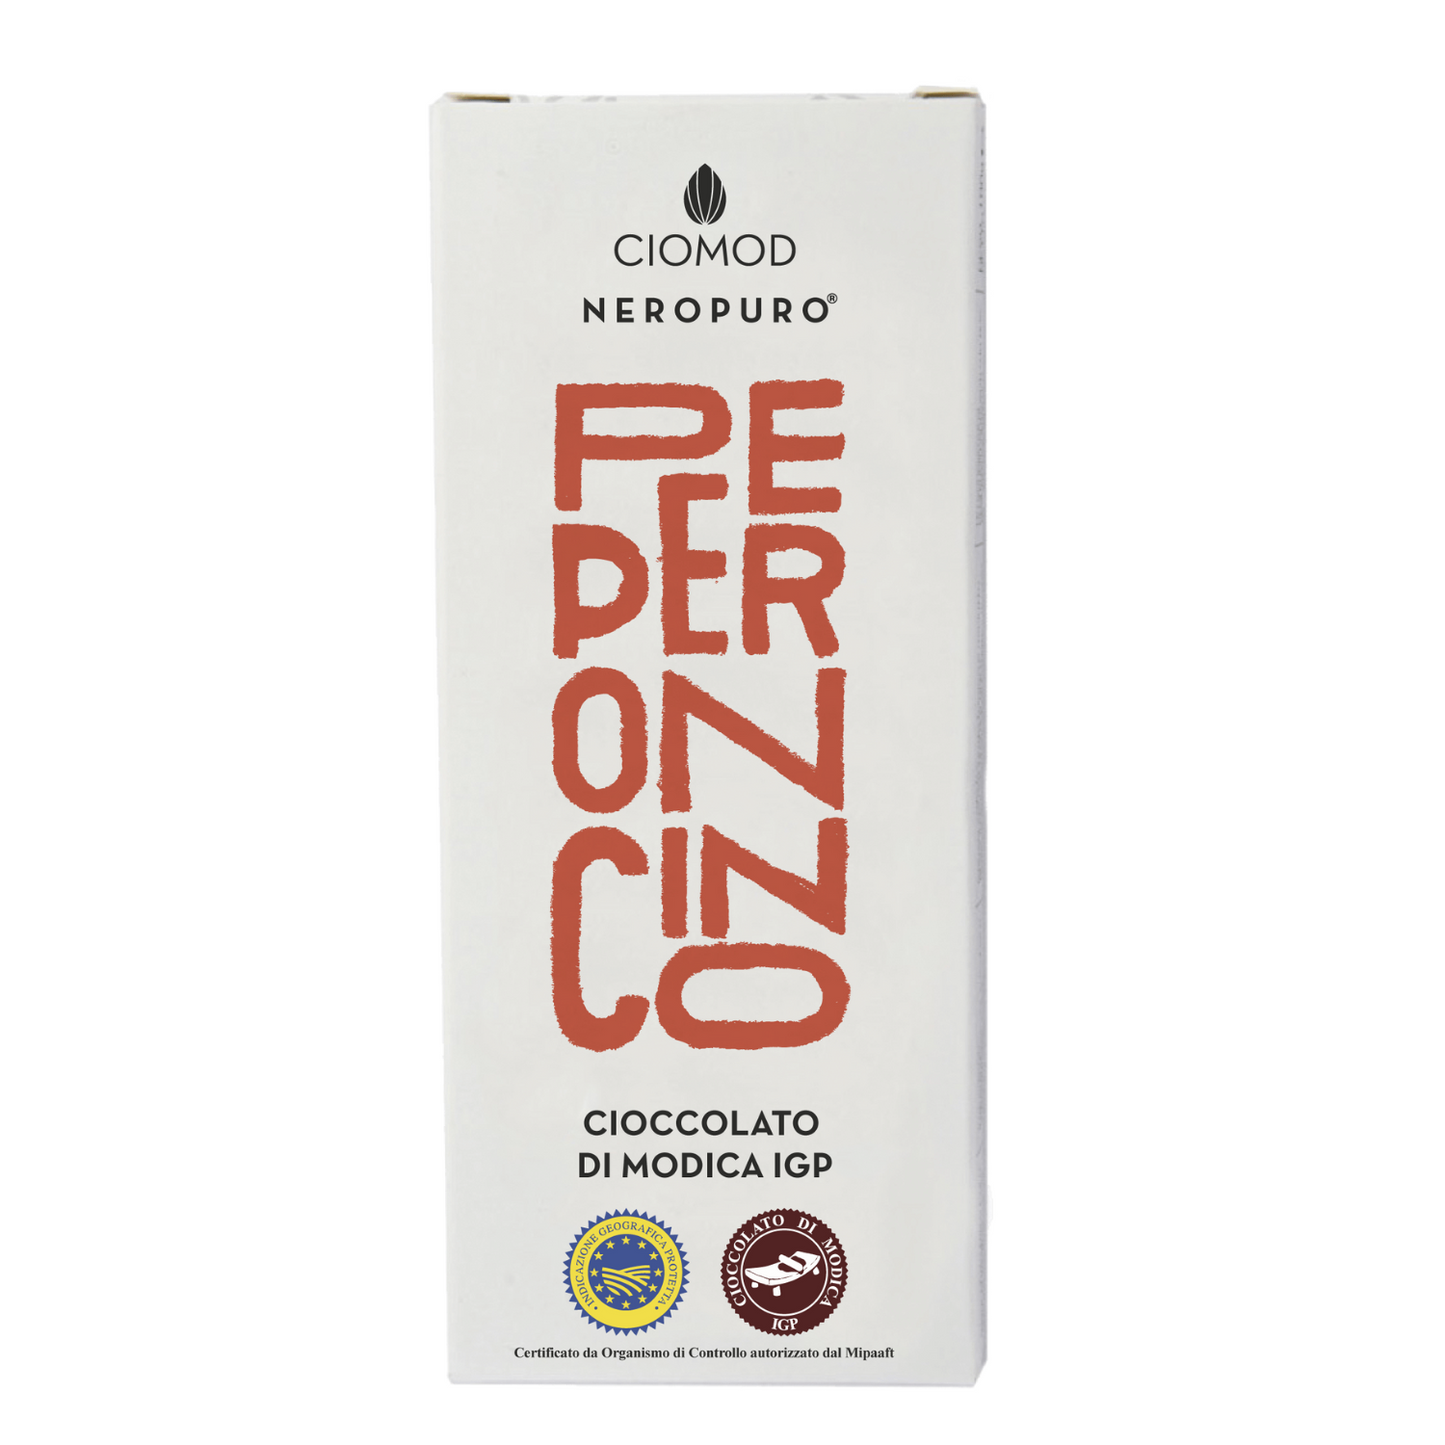 Cioccolato di Modica Igp Peperoncino - Ciomod